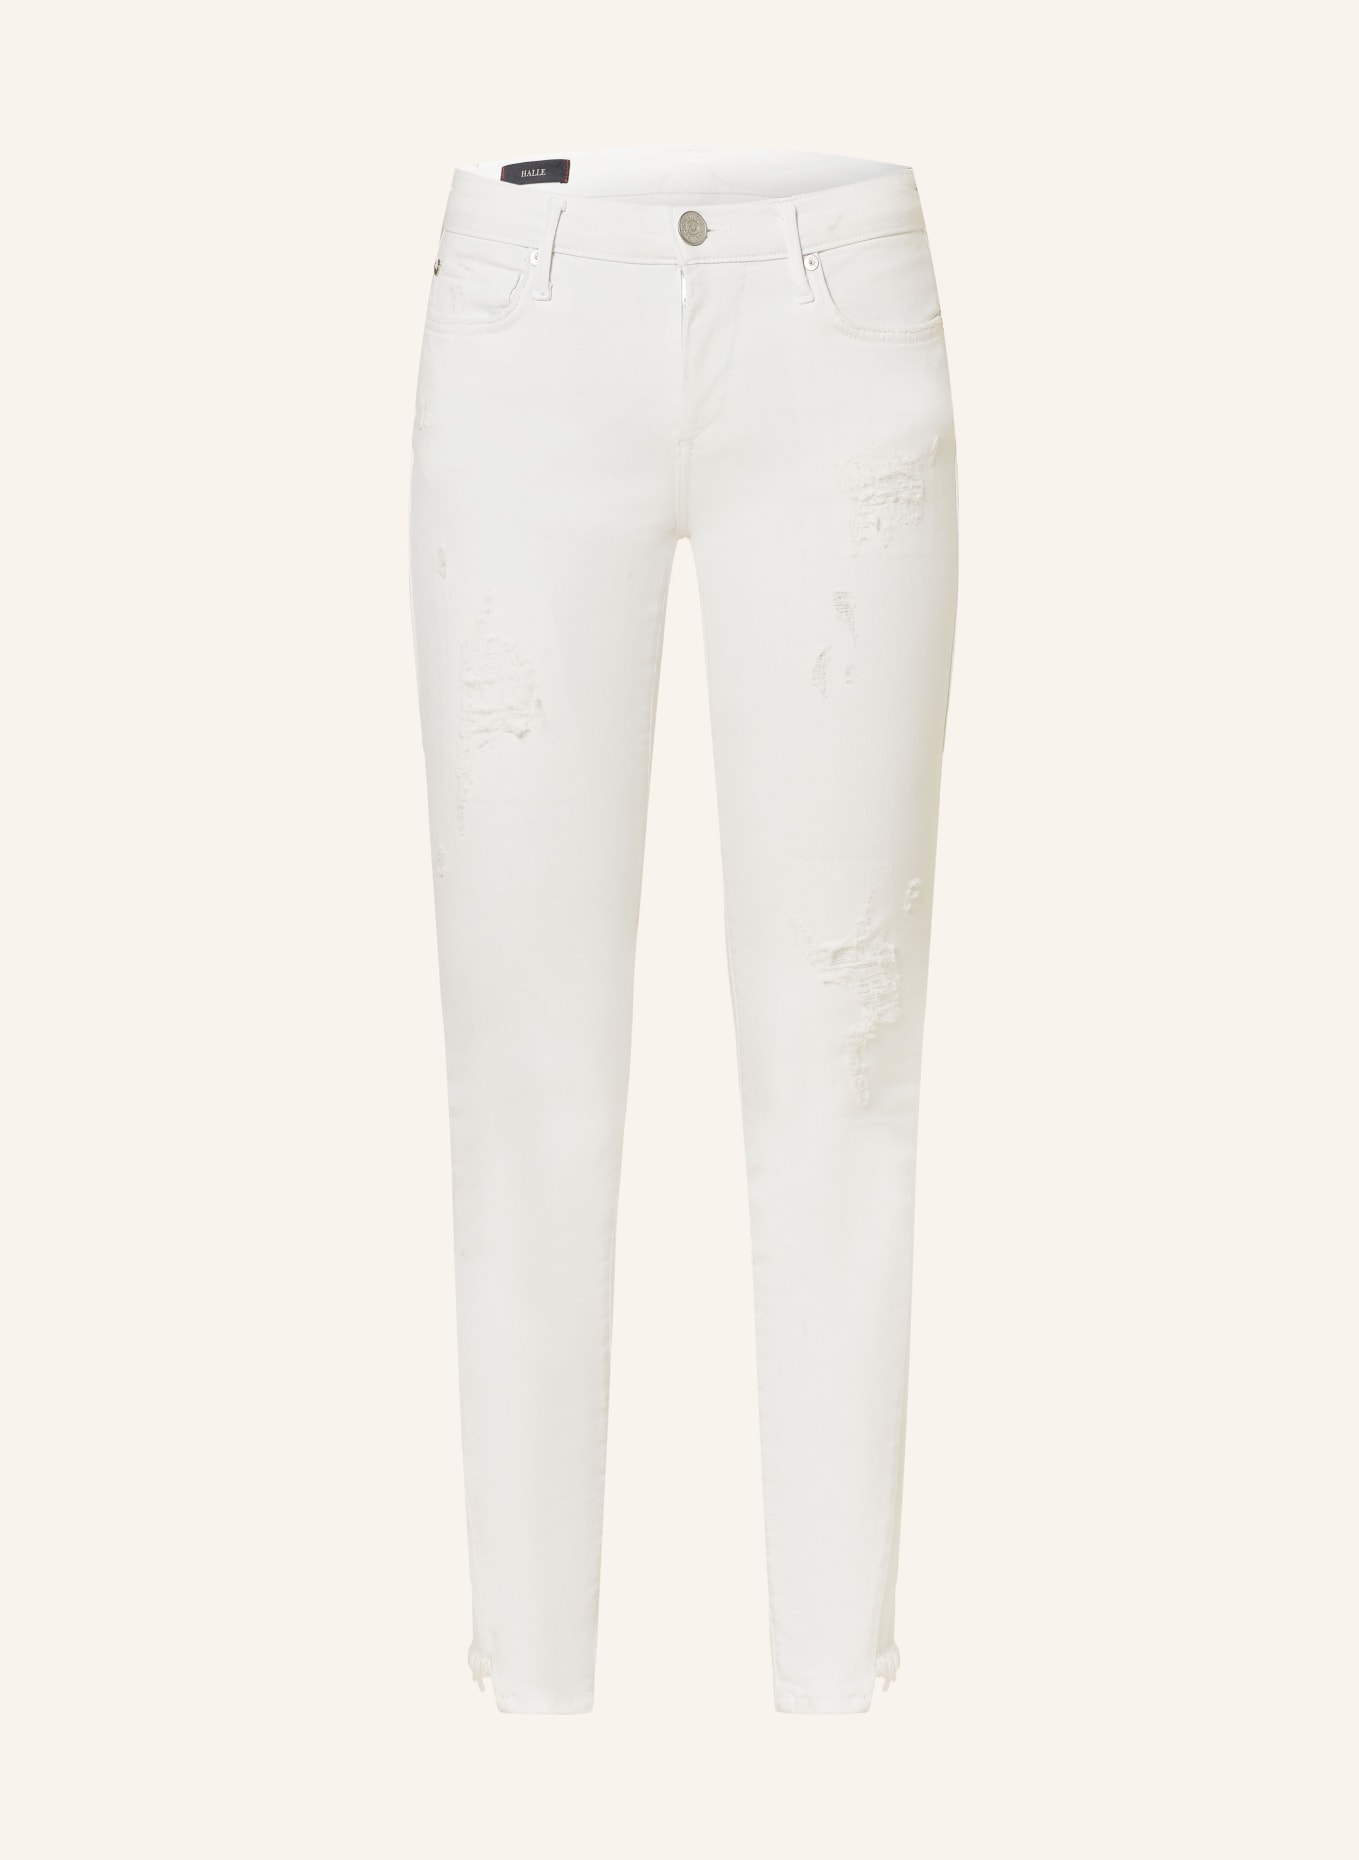 TRUE RELIGION Skinny Jeans HALLE, Farbe: 1700 DESTROYED OPTIC WHITE (Bild 1)